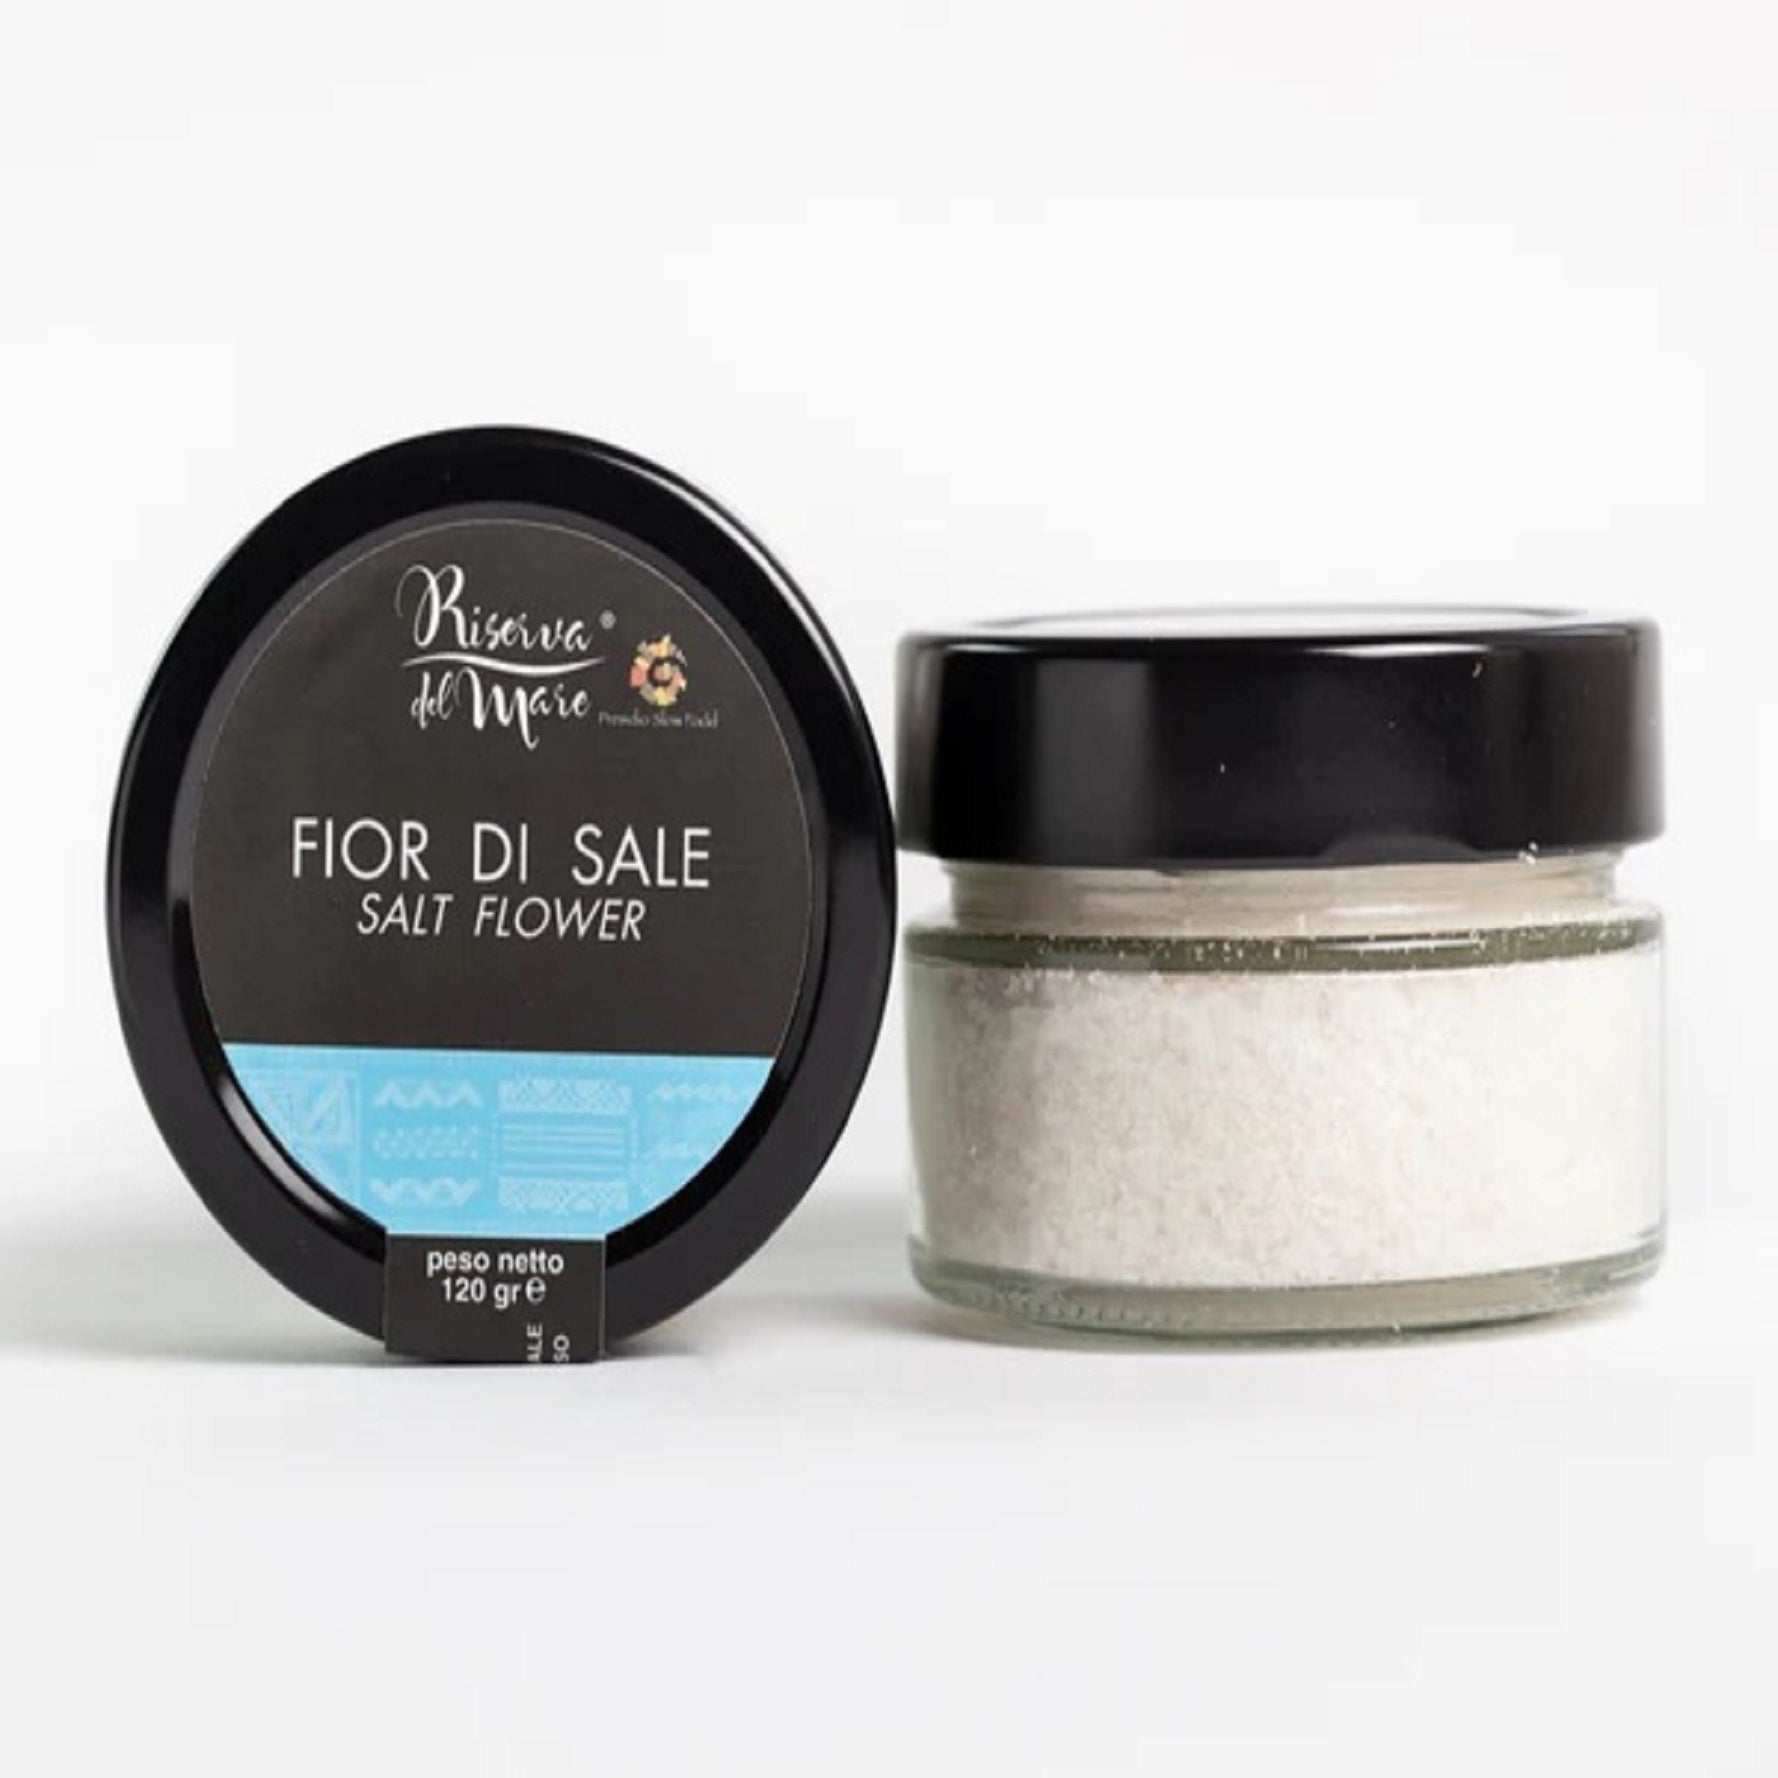 Riserva del Mare - Artisanal Marine Flower Salt of Trapani "Slow Food"